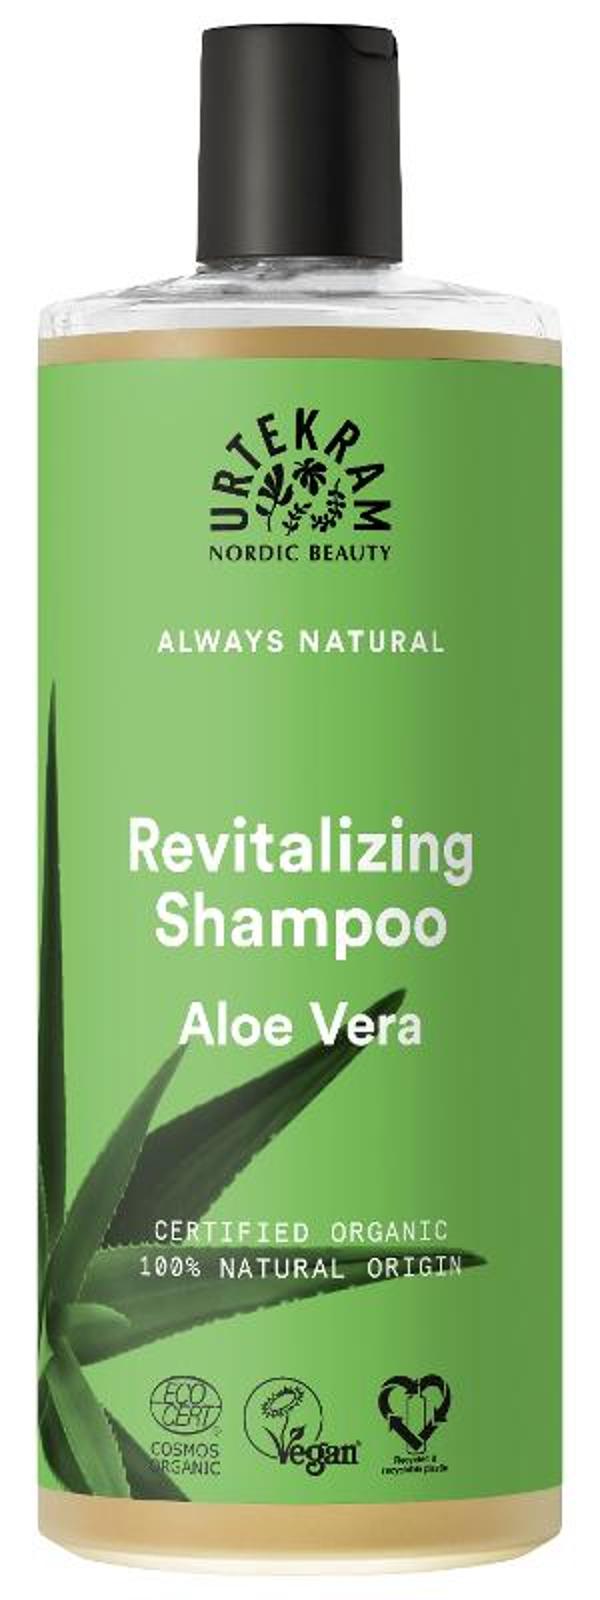 Produktfoto zu Aloe Vera Shampoo 500ml